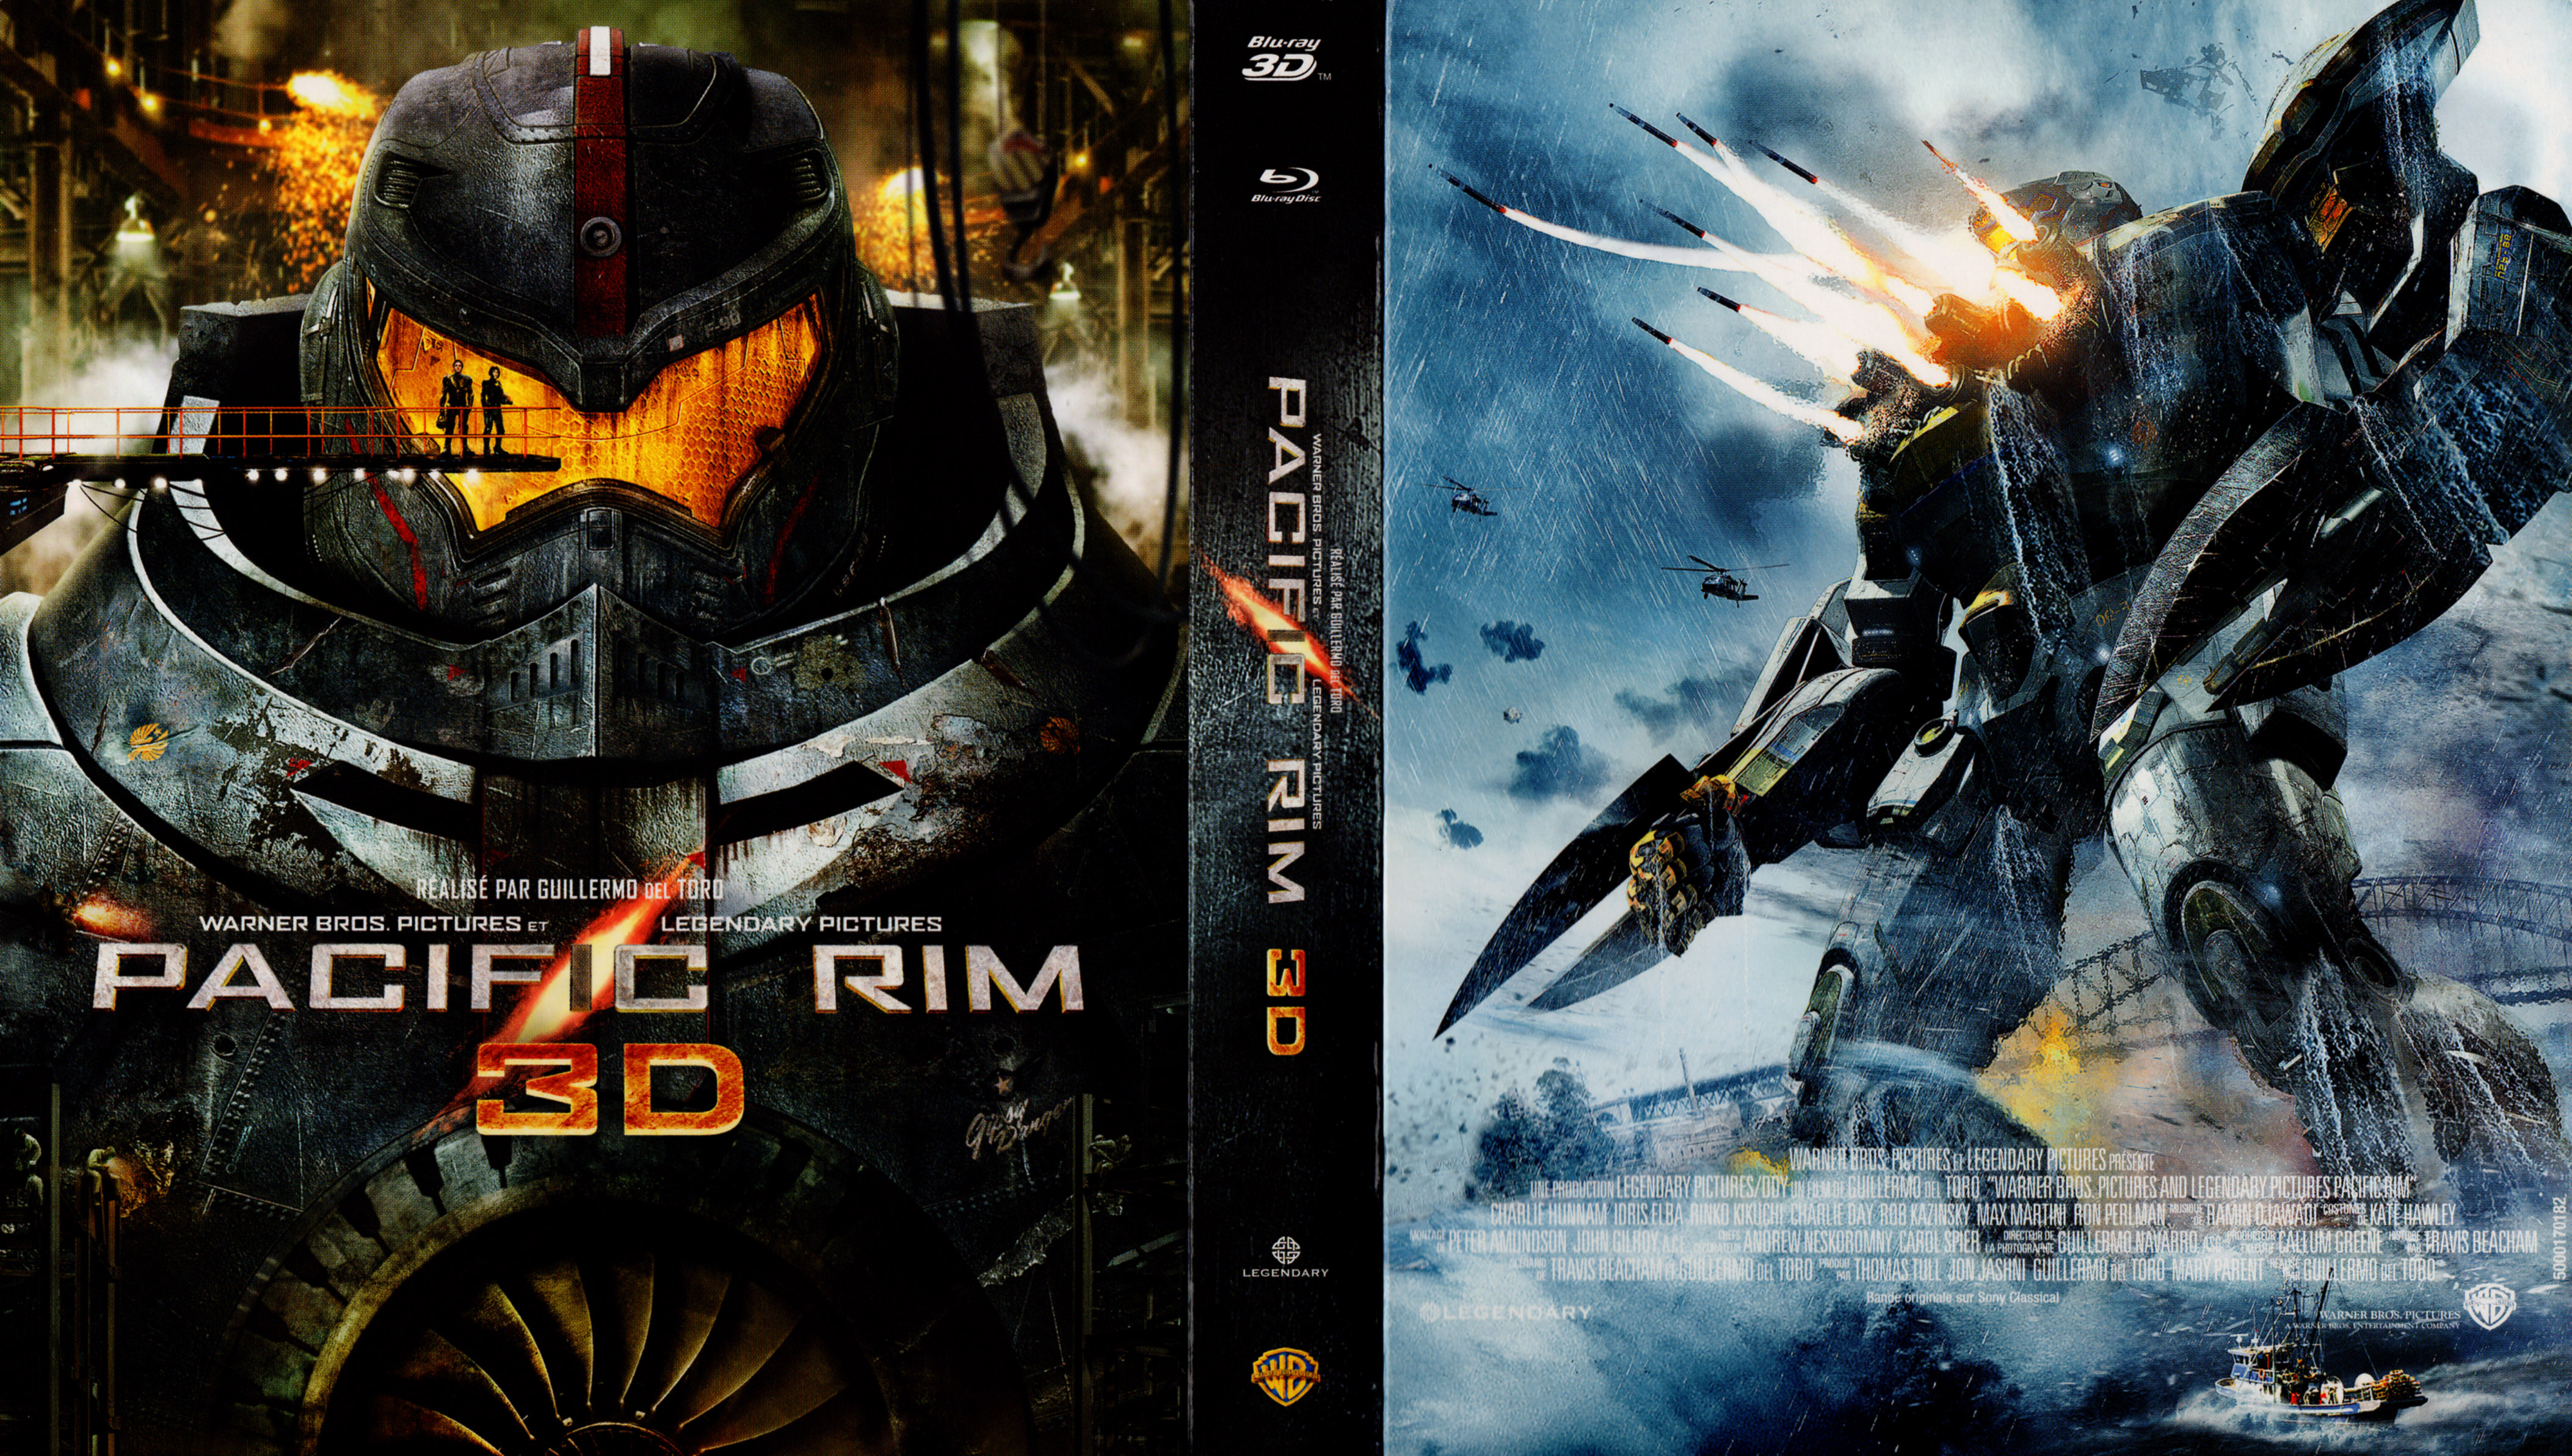 Jaquette DVD Pacific Rim 3D (BLU-RAY) v2